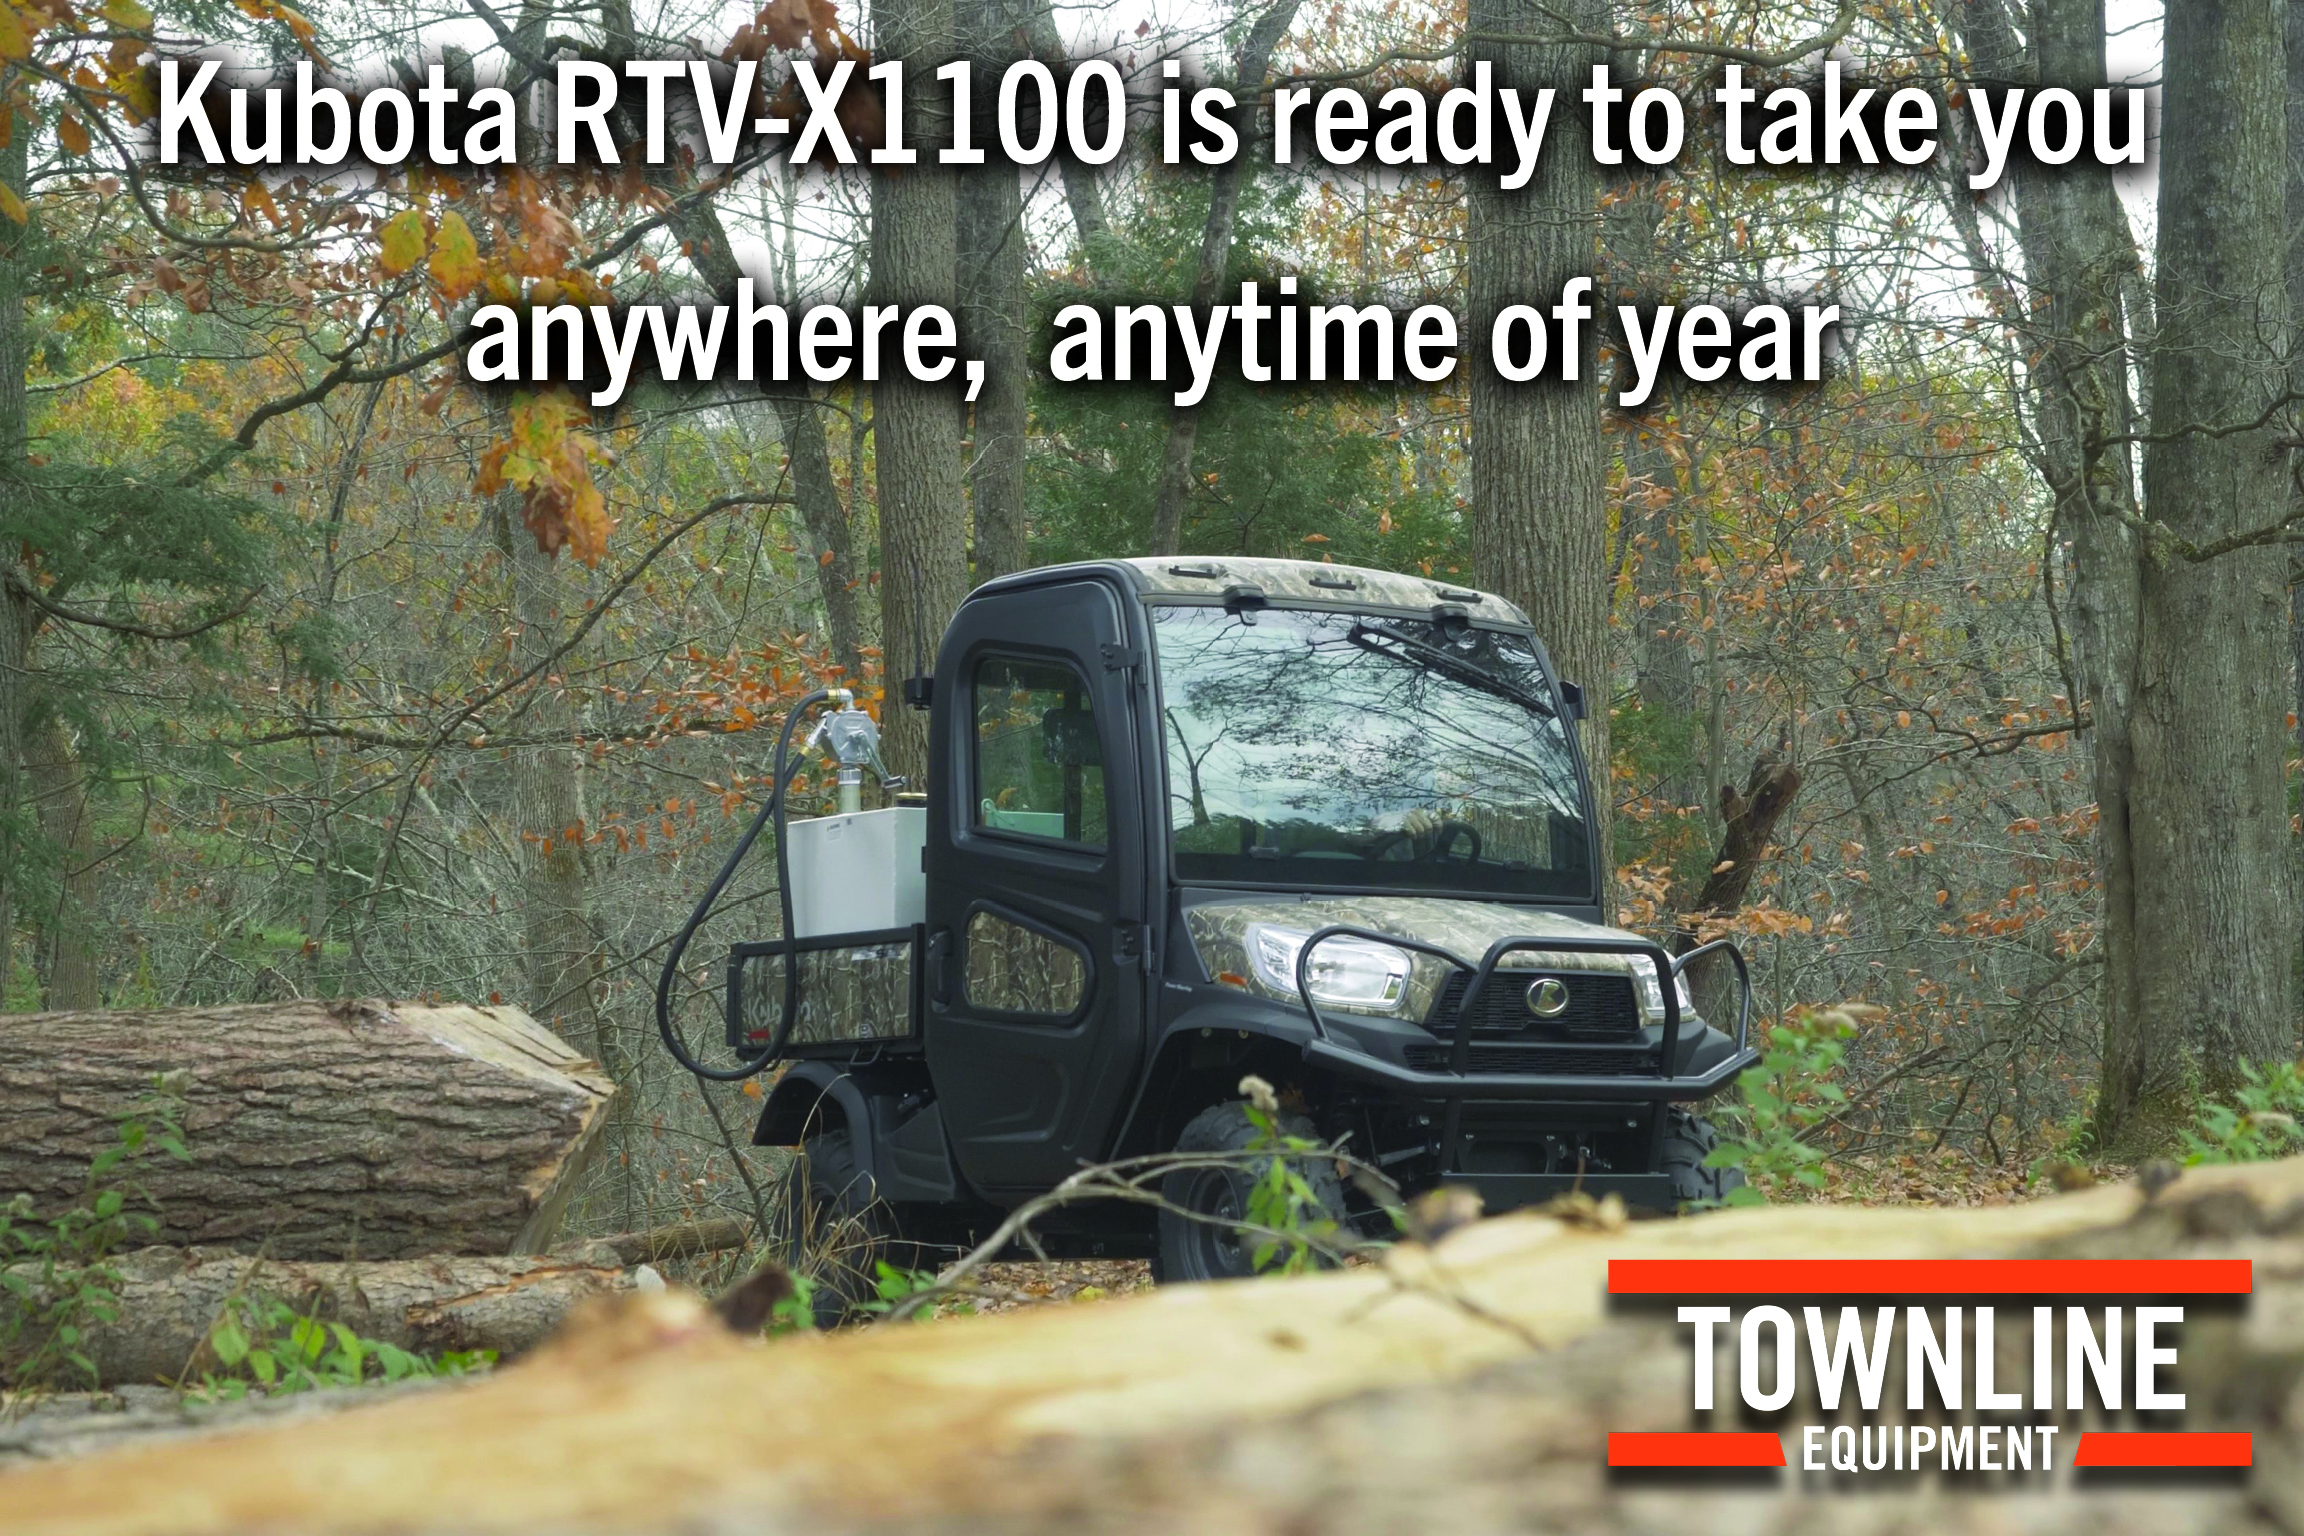 RTV-X1100 taking you anywhere, anytime